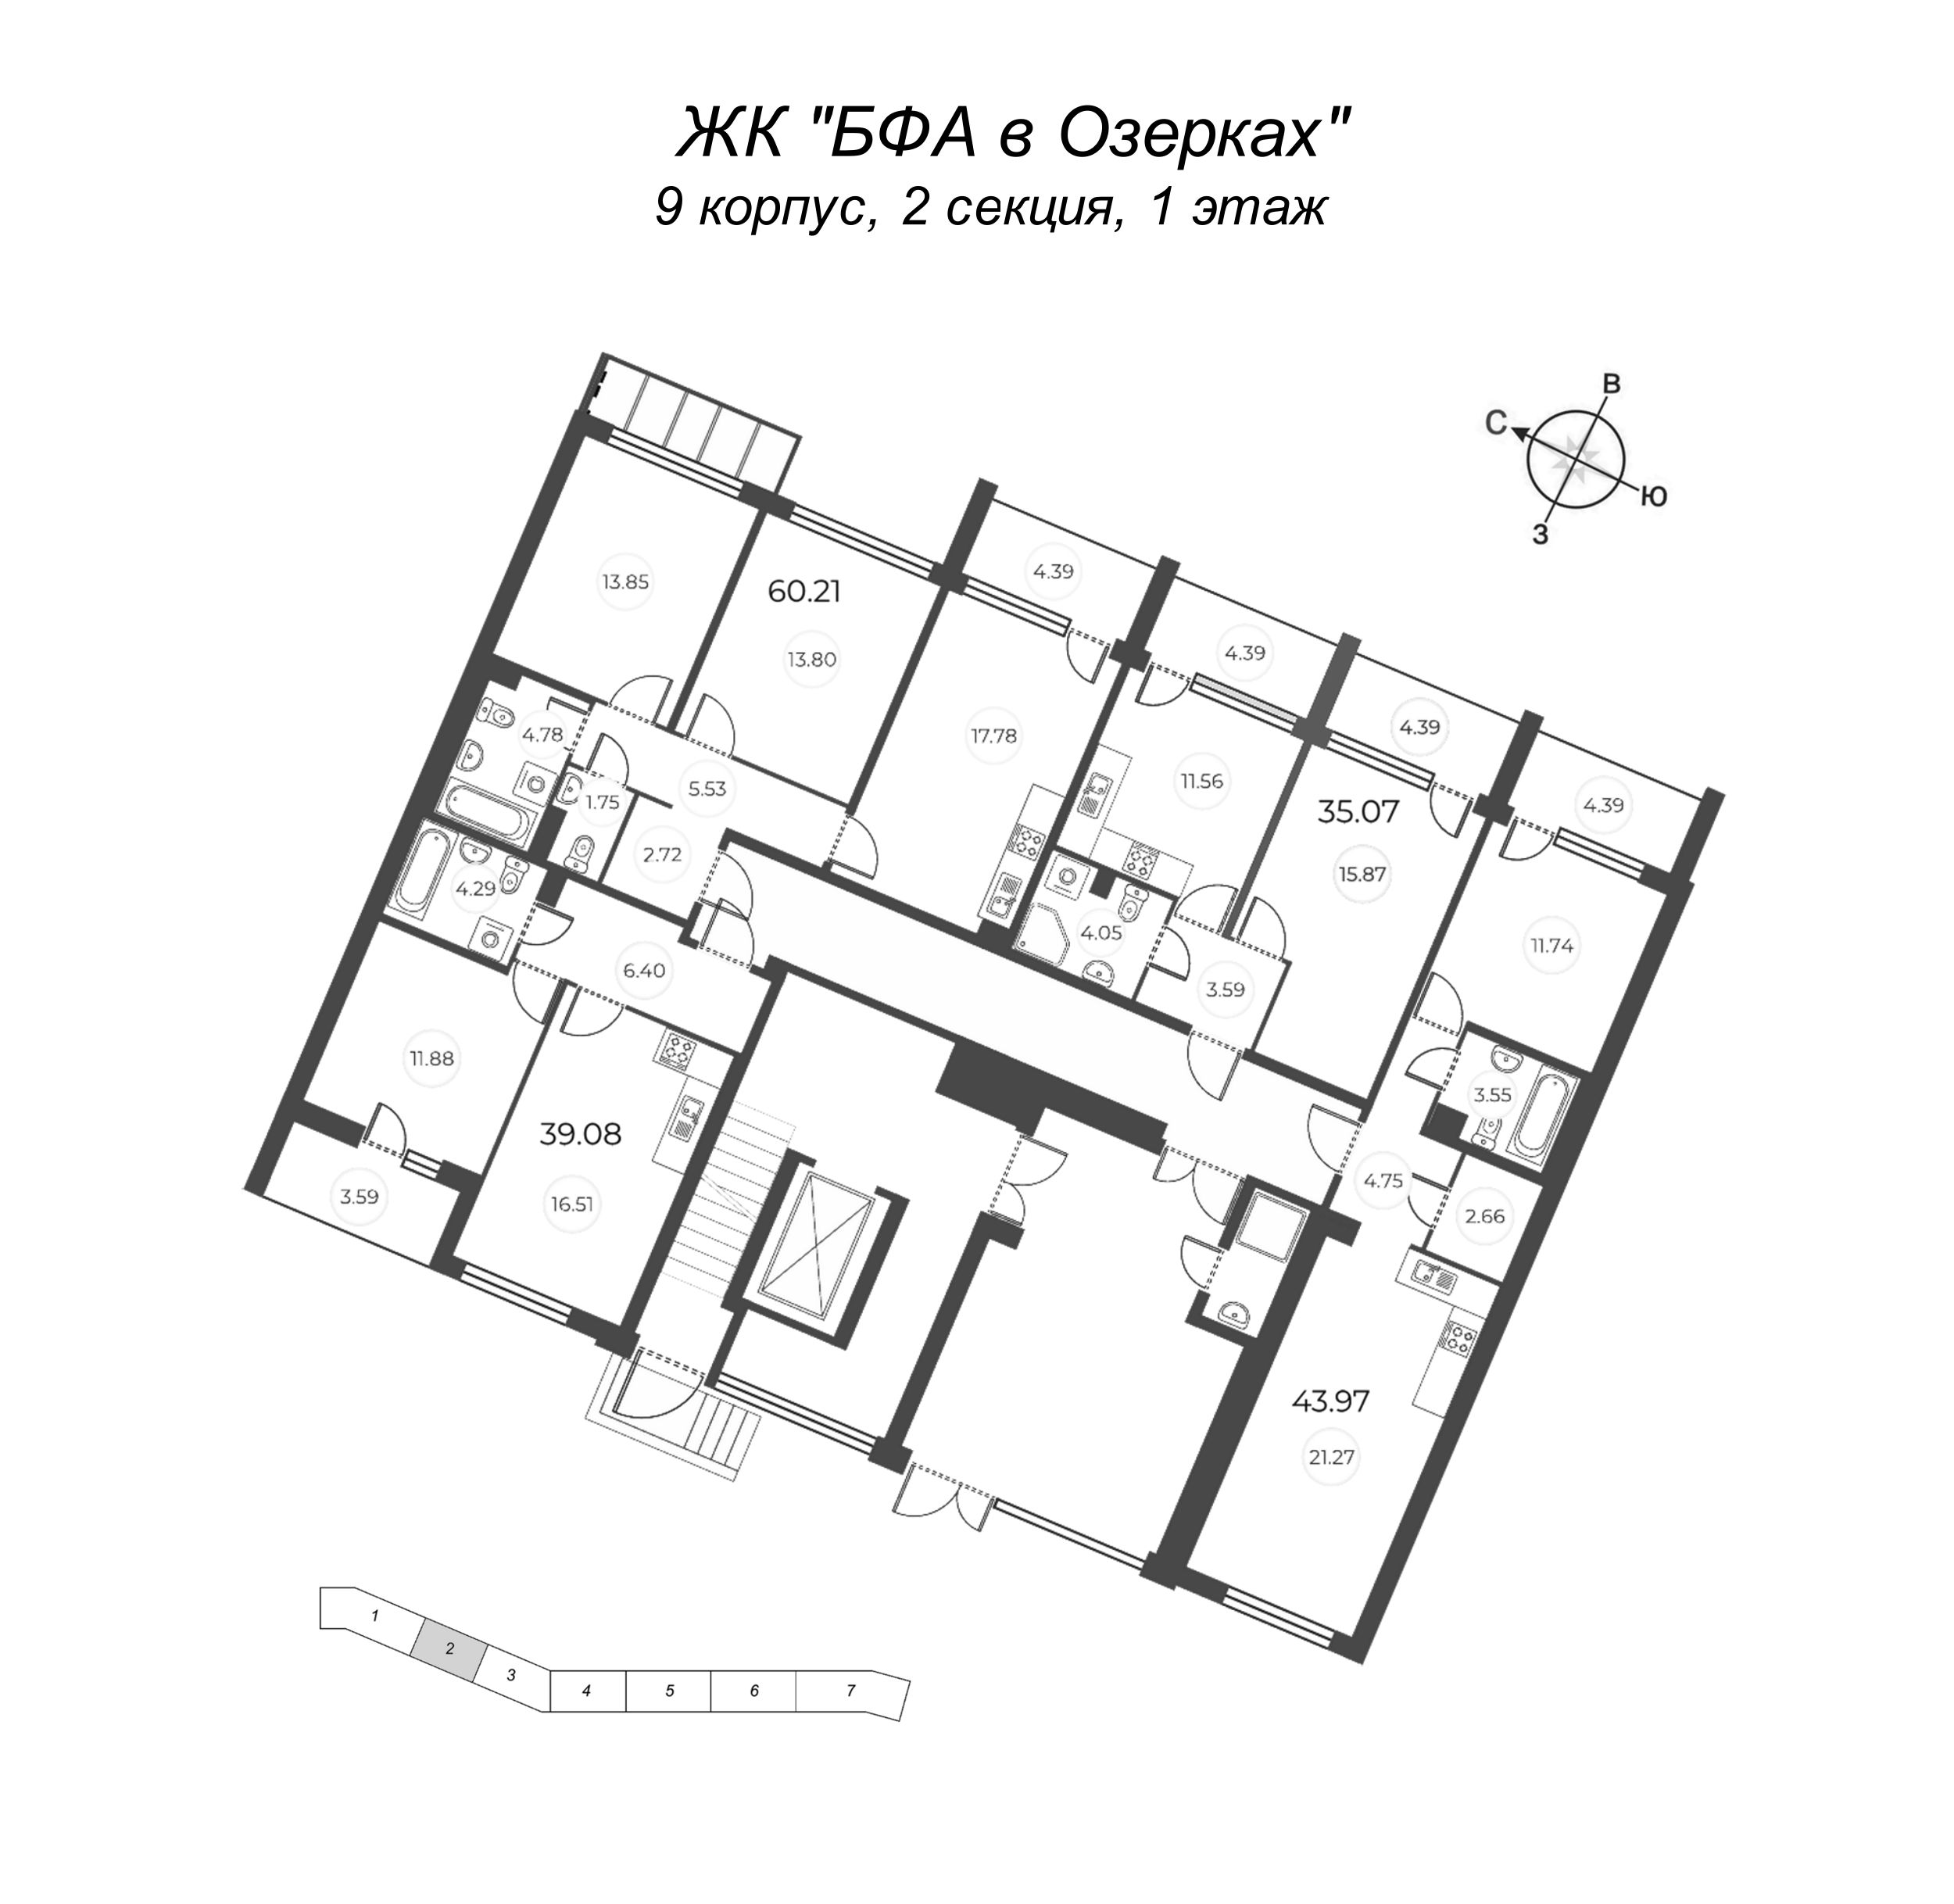 2-комнатная (Евро) квартира, 40.88 м² - планировка этажа